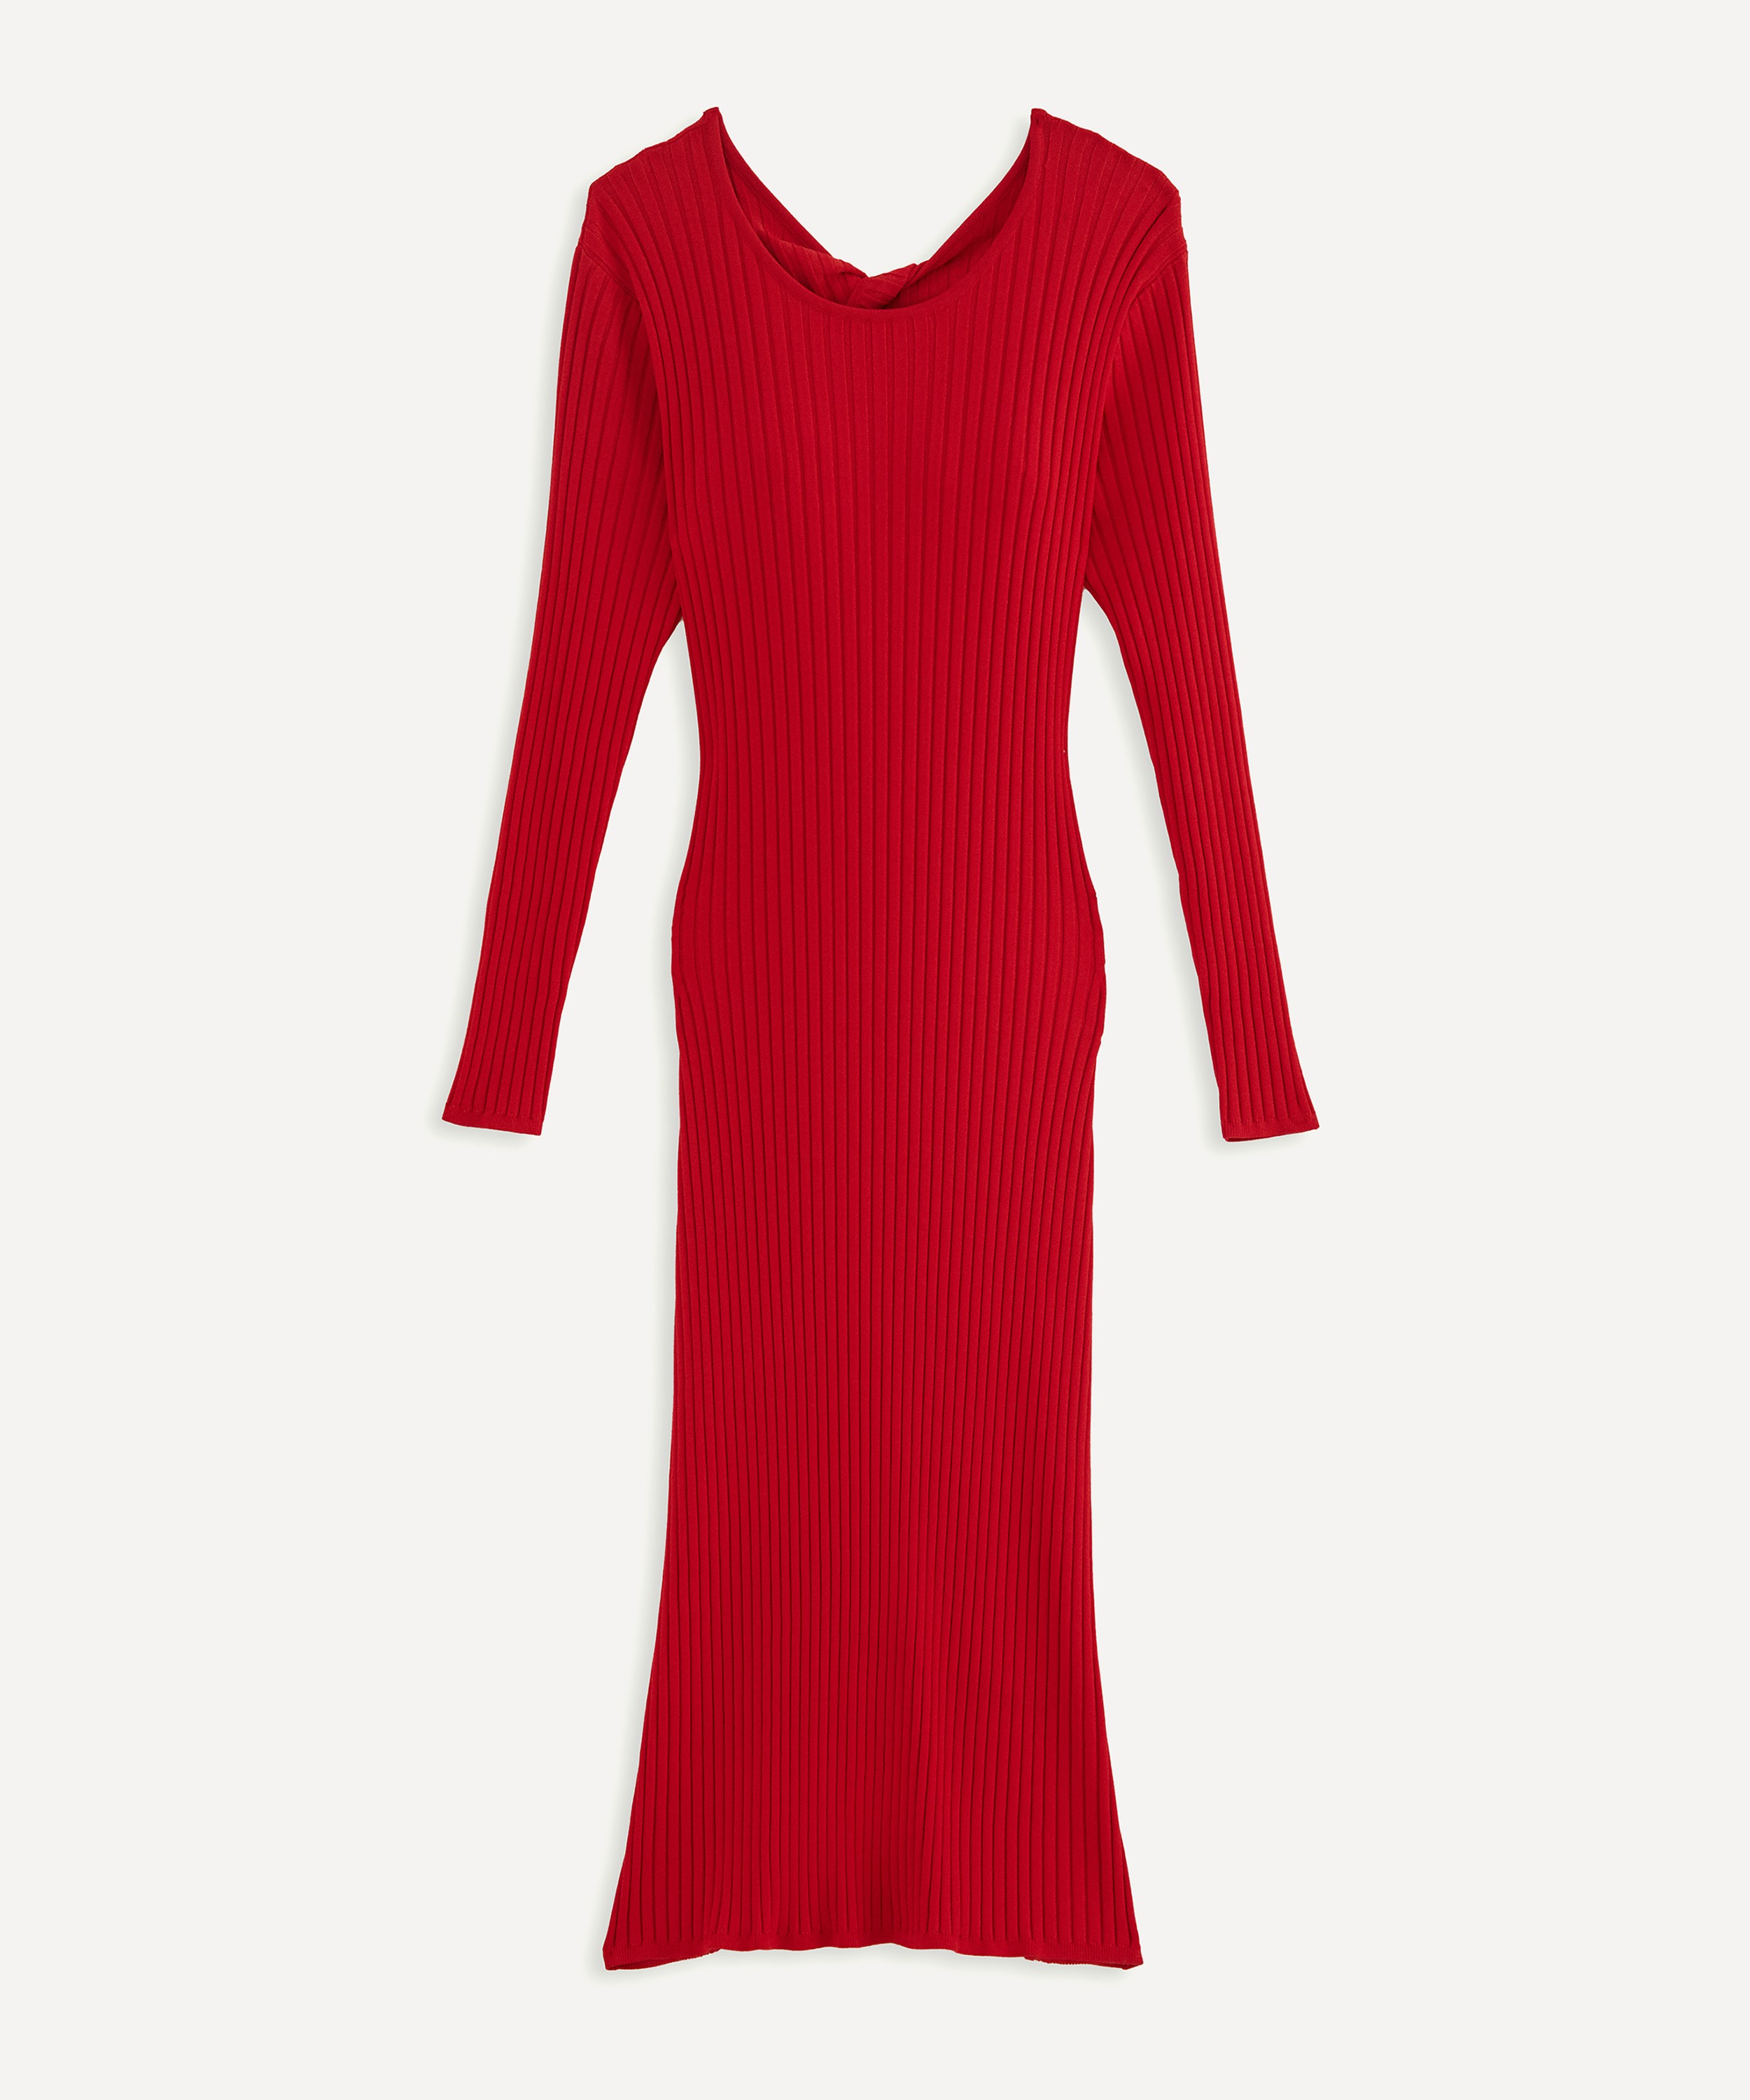 FARM Rio - Red Knit Midi-Dress